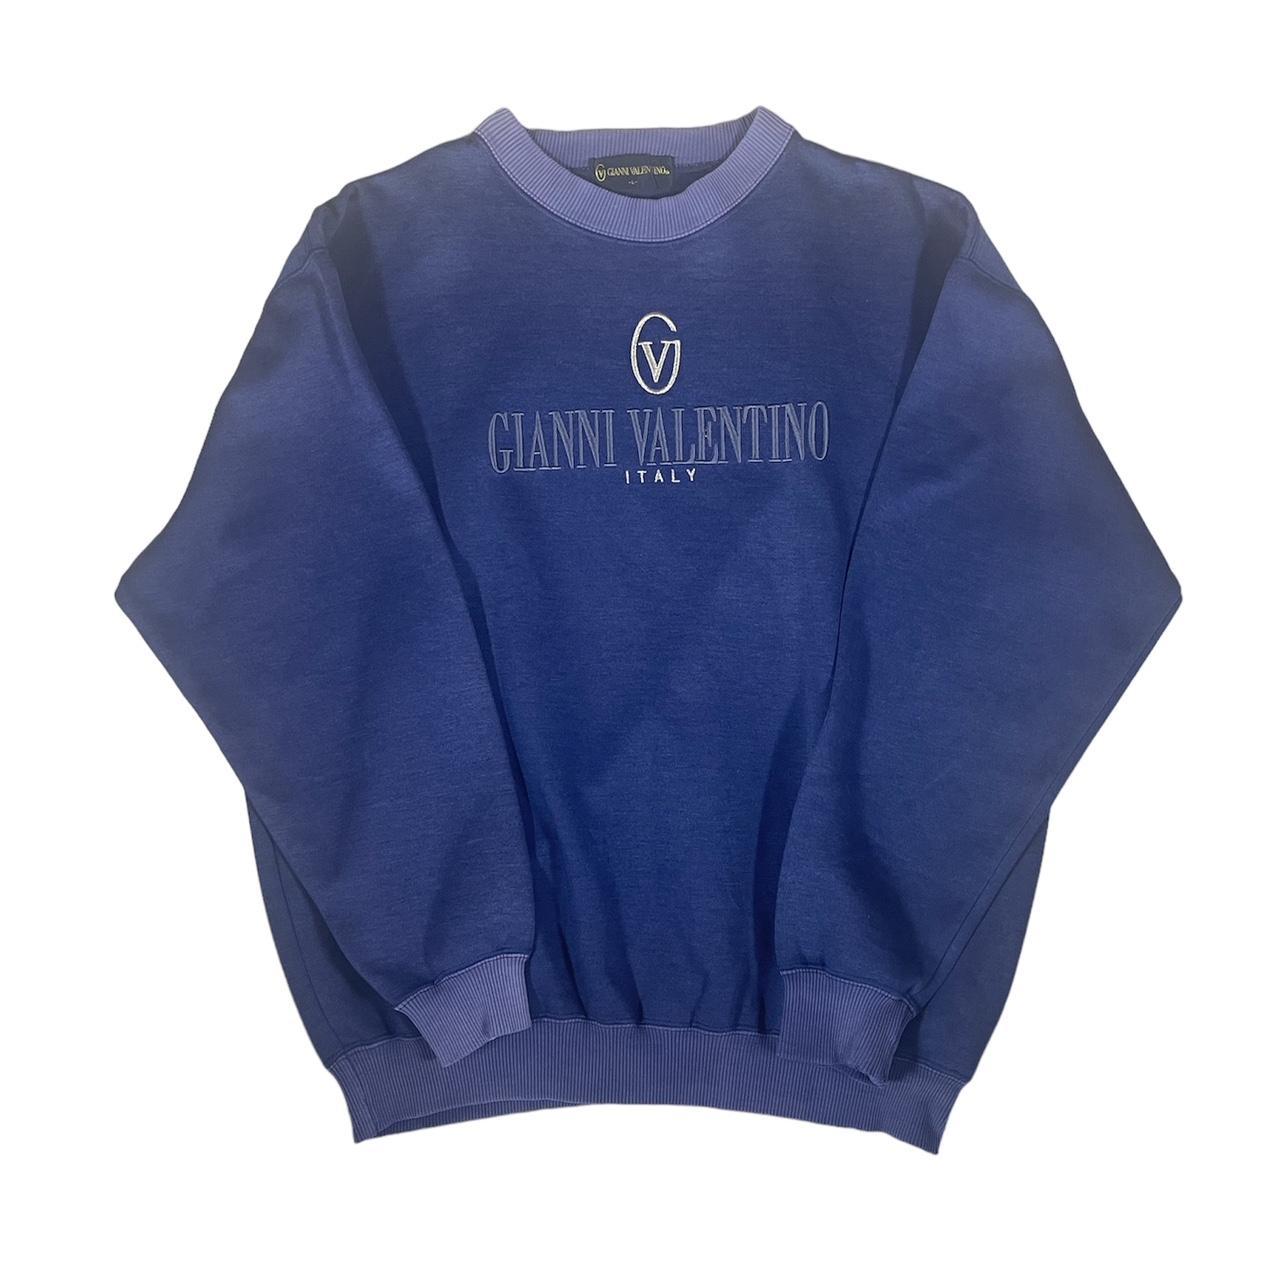 Valentino Men's Navy and Blue Sweatshirt